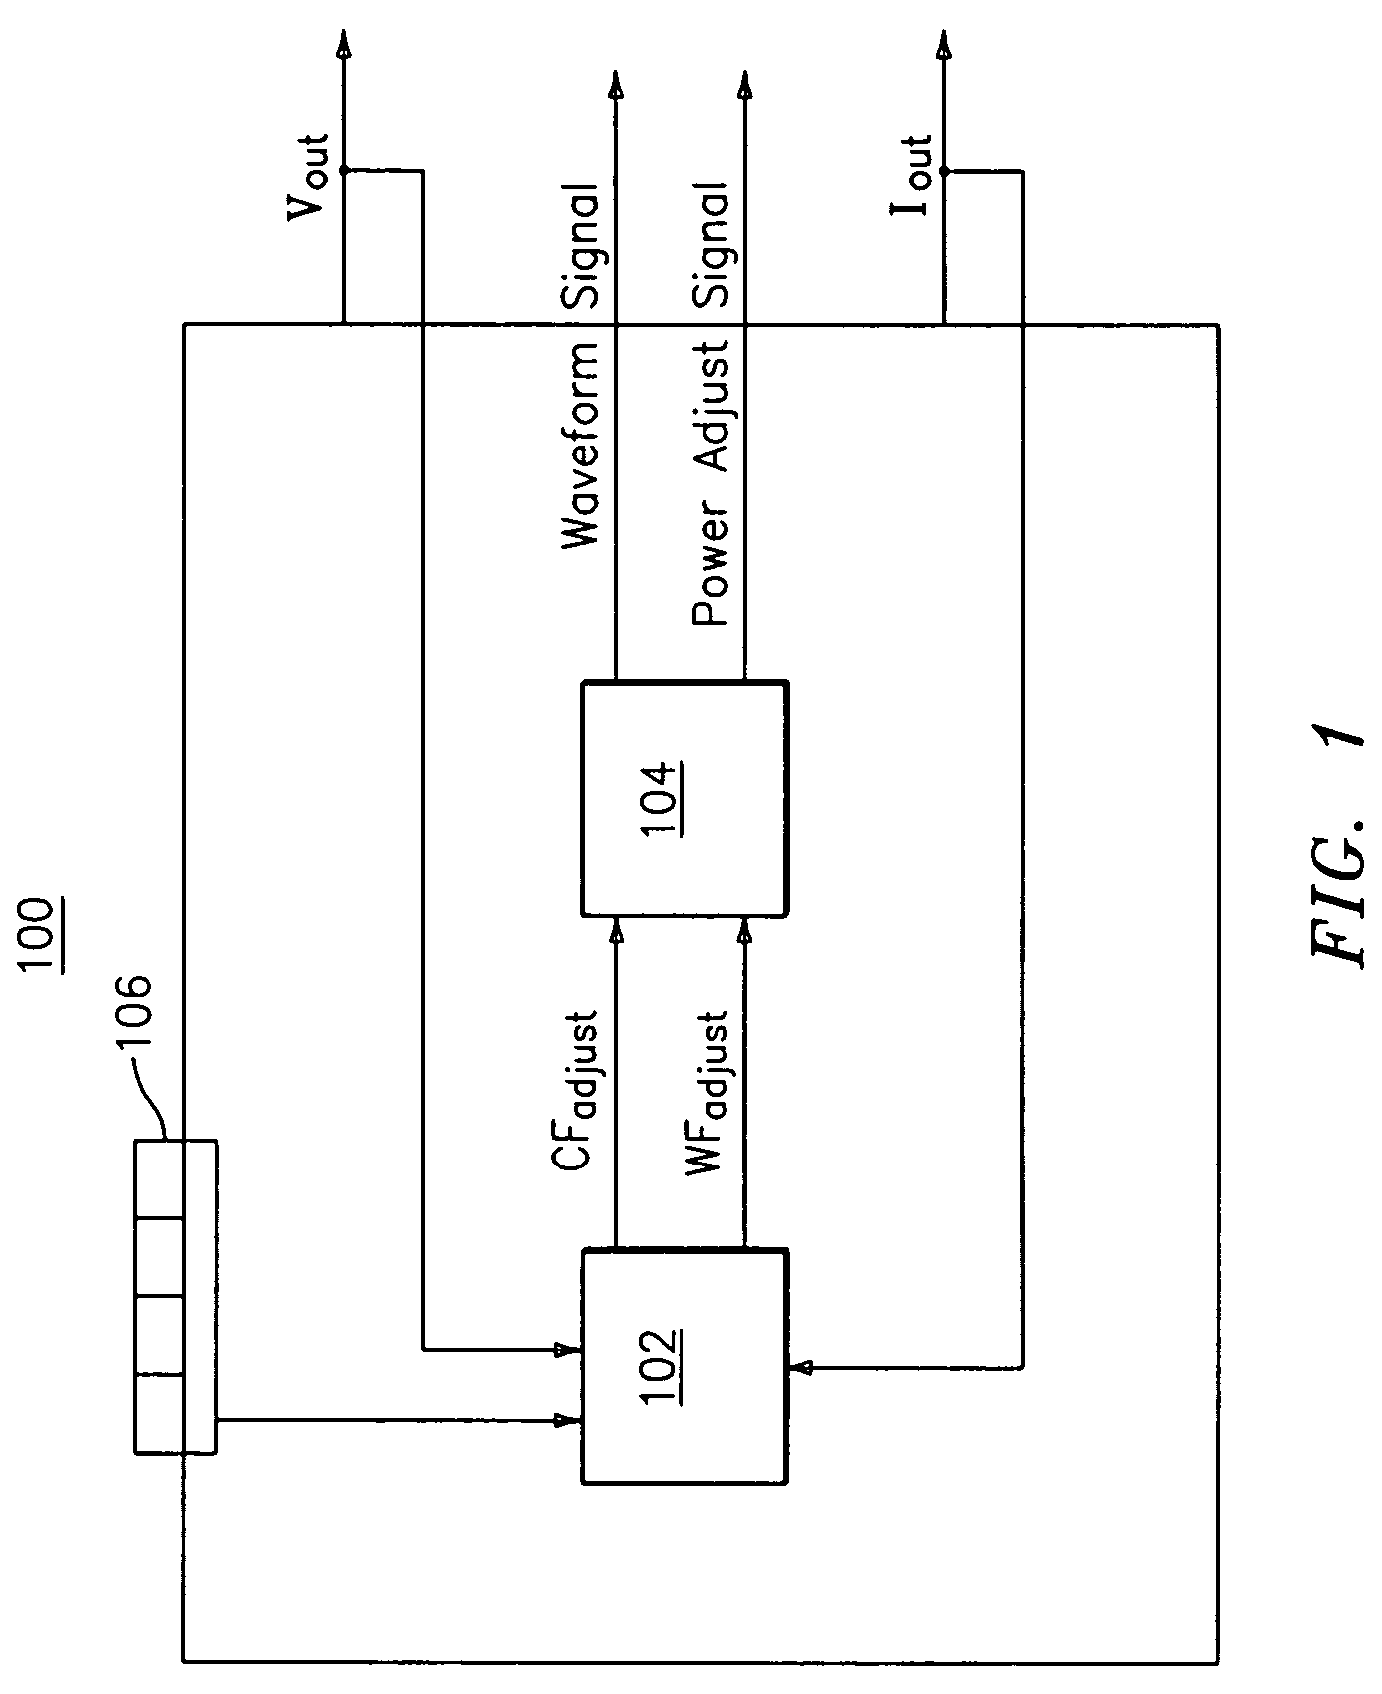 Variable output crest factor electrosurgical generator